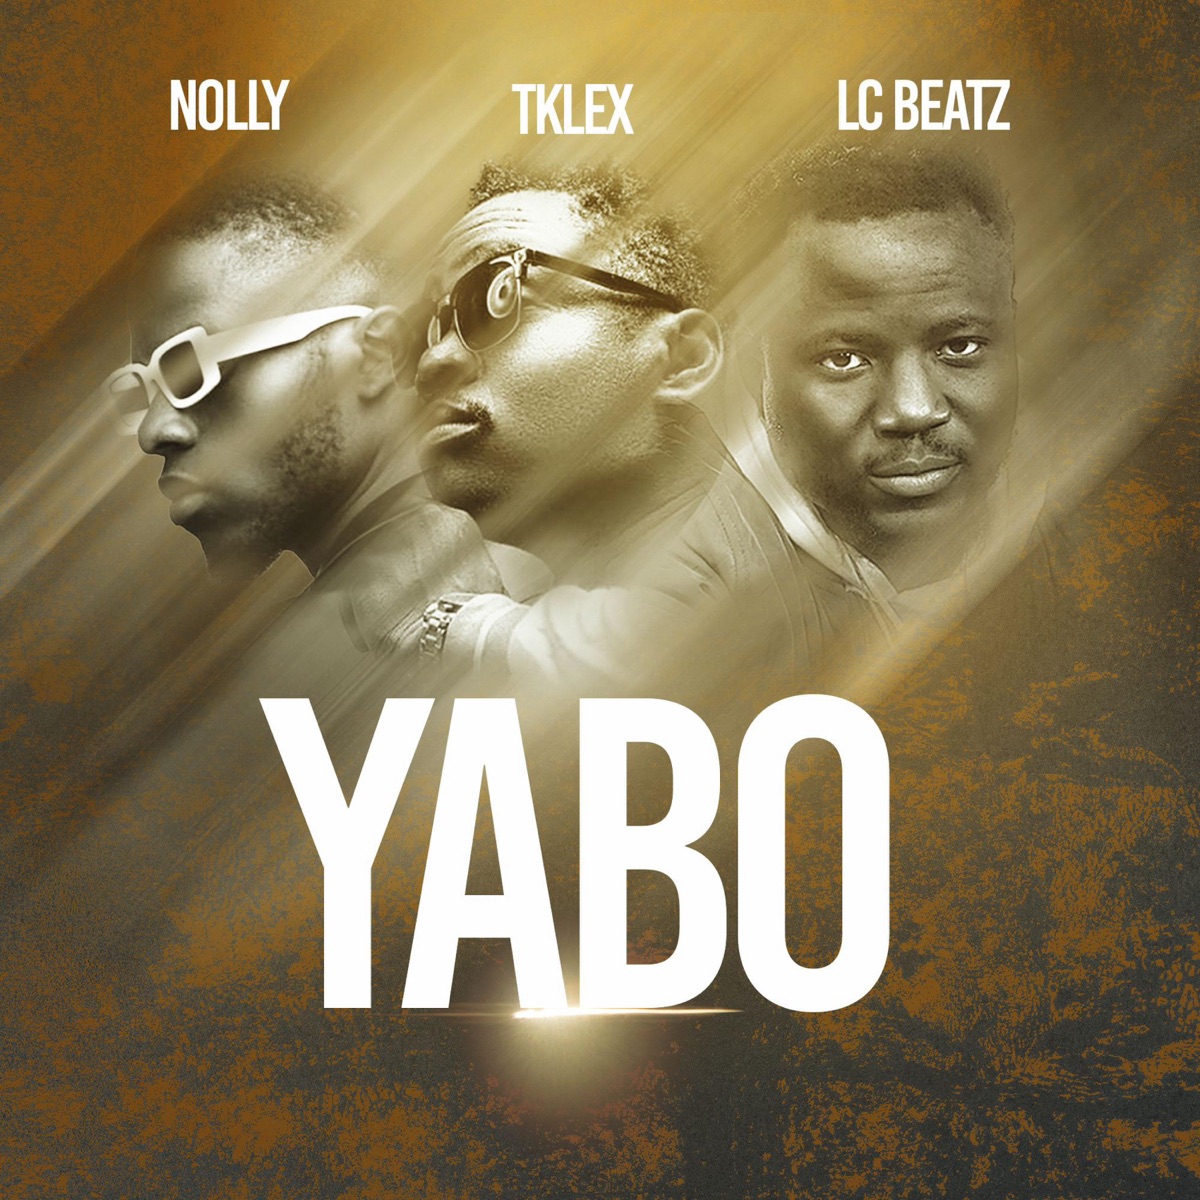 Nolly & Lc Beatz - Yabo (feat. Tklex) - Single